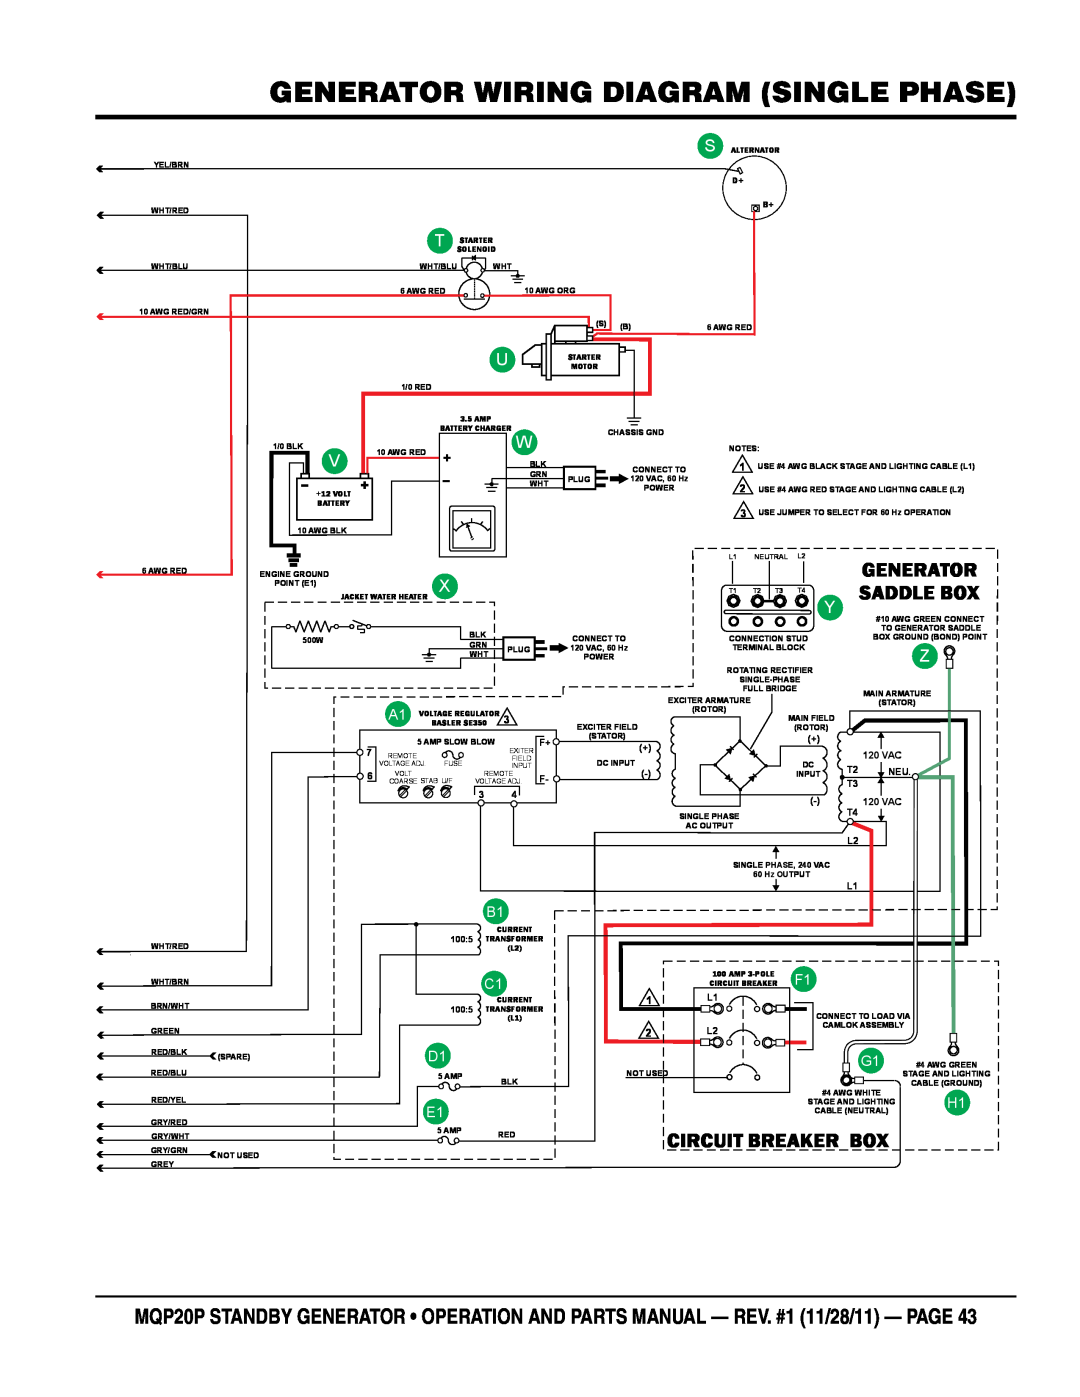 Multiquip MQP20P manual generator Wiring Diagram single phase, Saddle Box, Circuit Breaker Box, Generator, Va C, 1005 